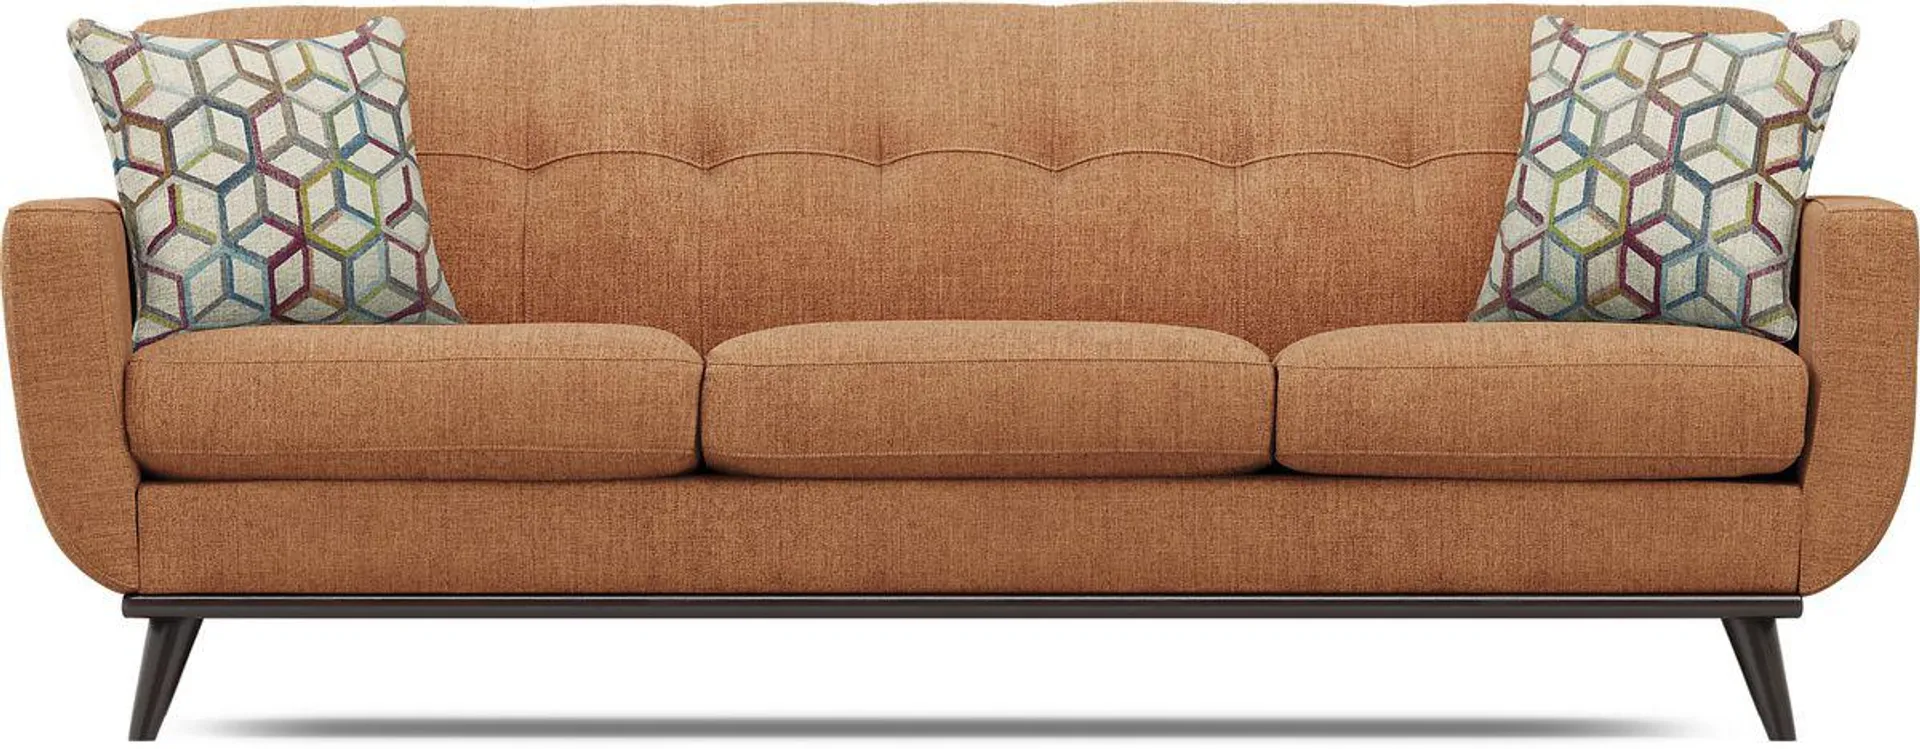 East Side Russet Orange Chenille Fabric Sofa